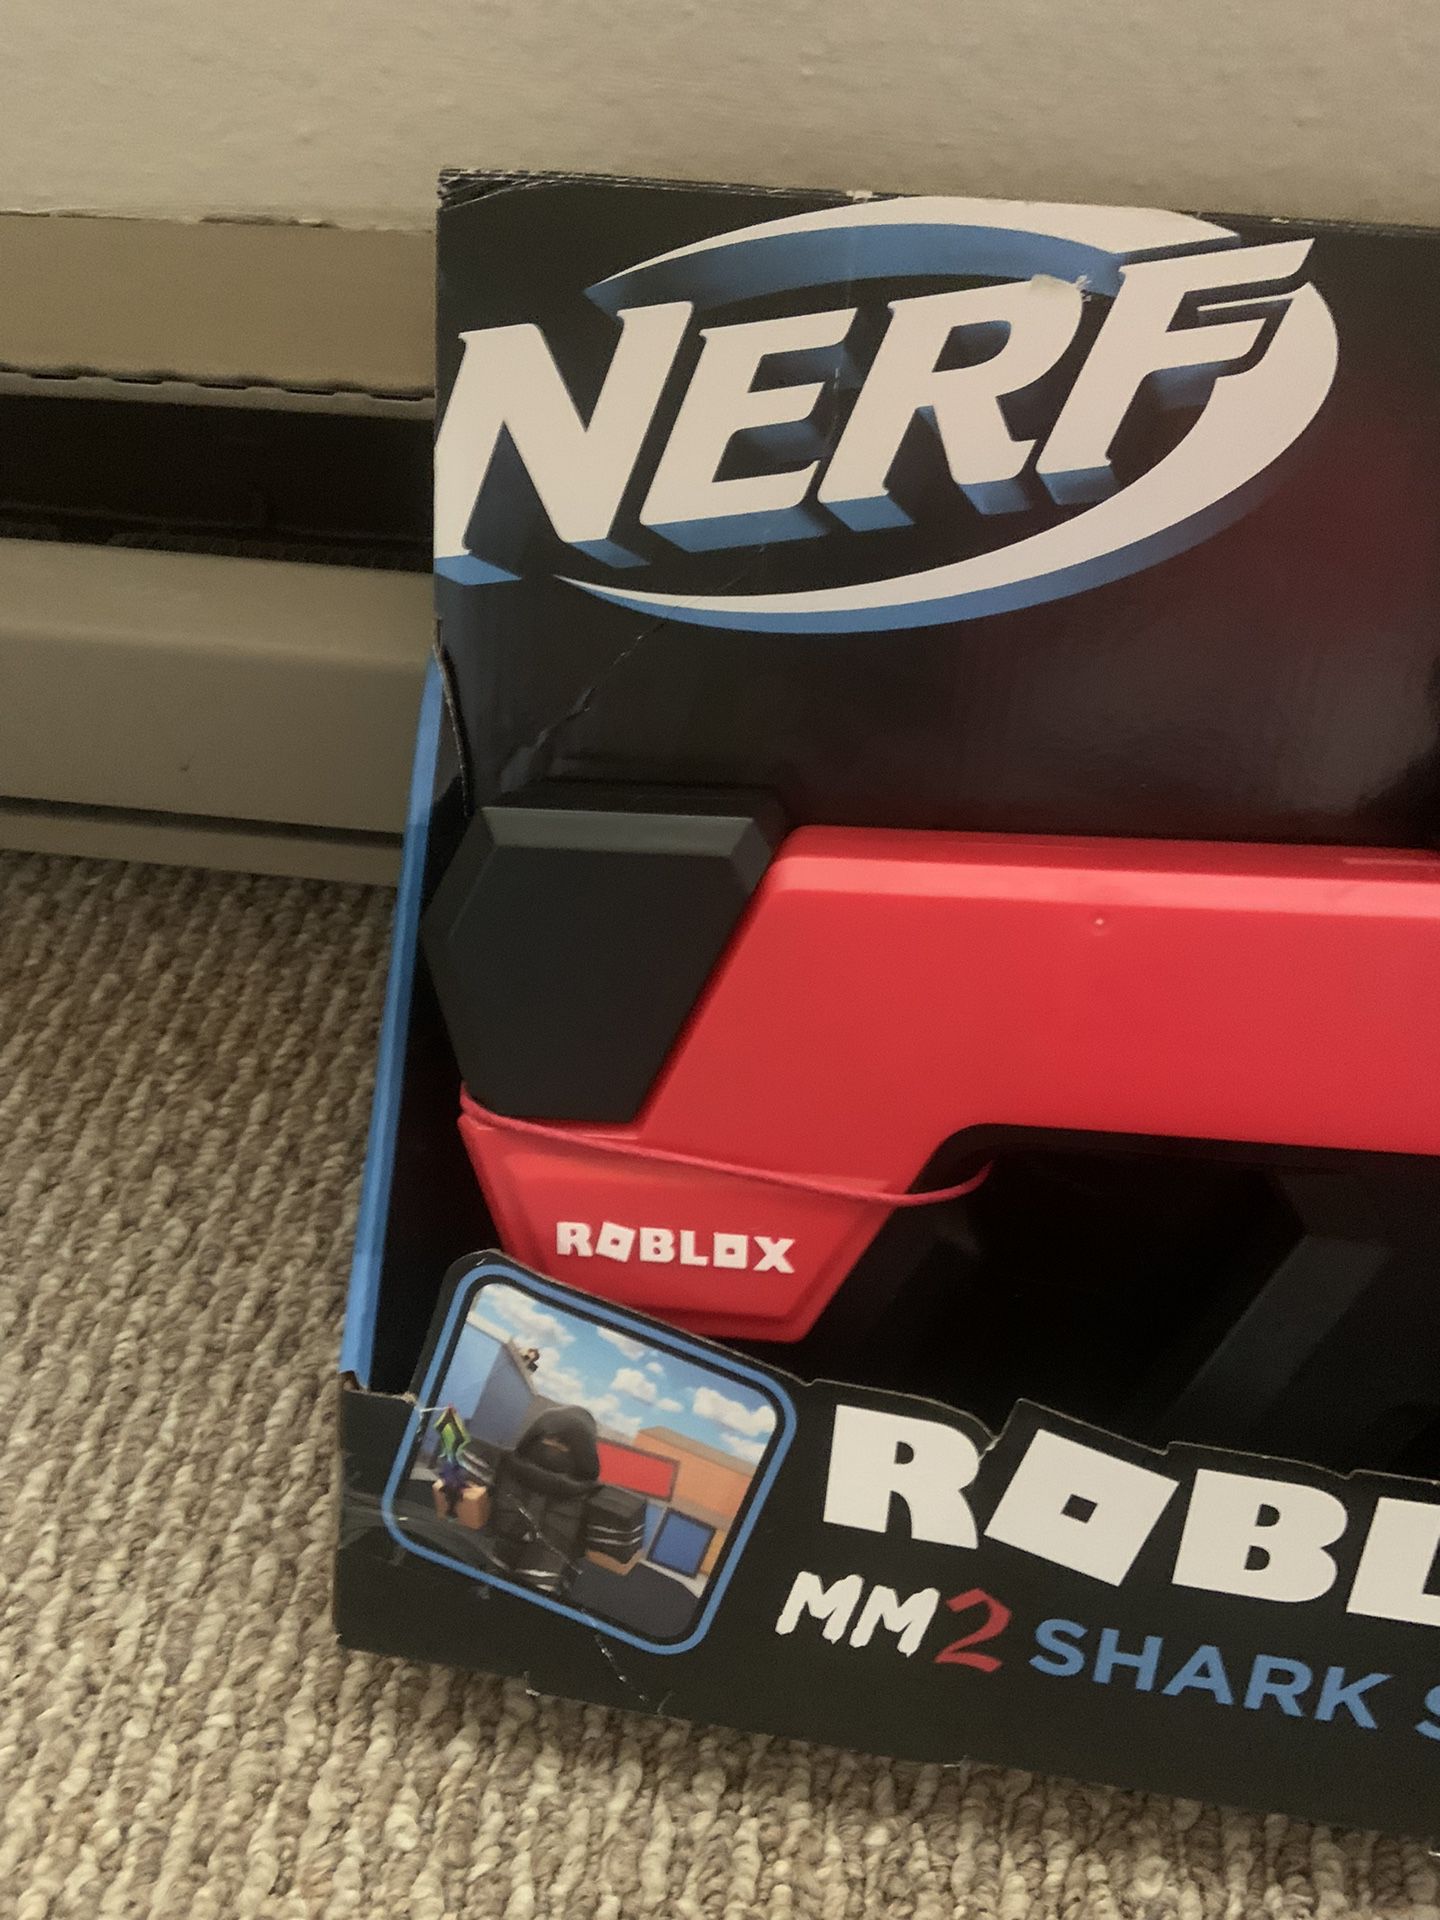 MM2 Roblox Shark Seeker Nerf gun, Hobbies & Toys, Toys & Games on Carousell